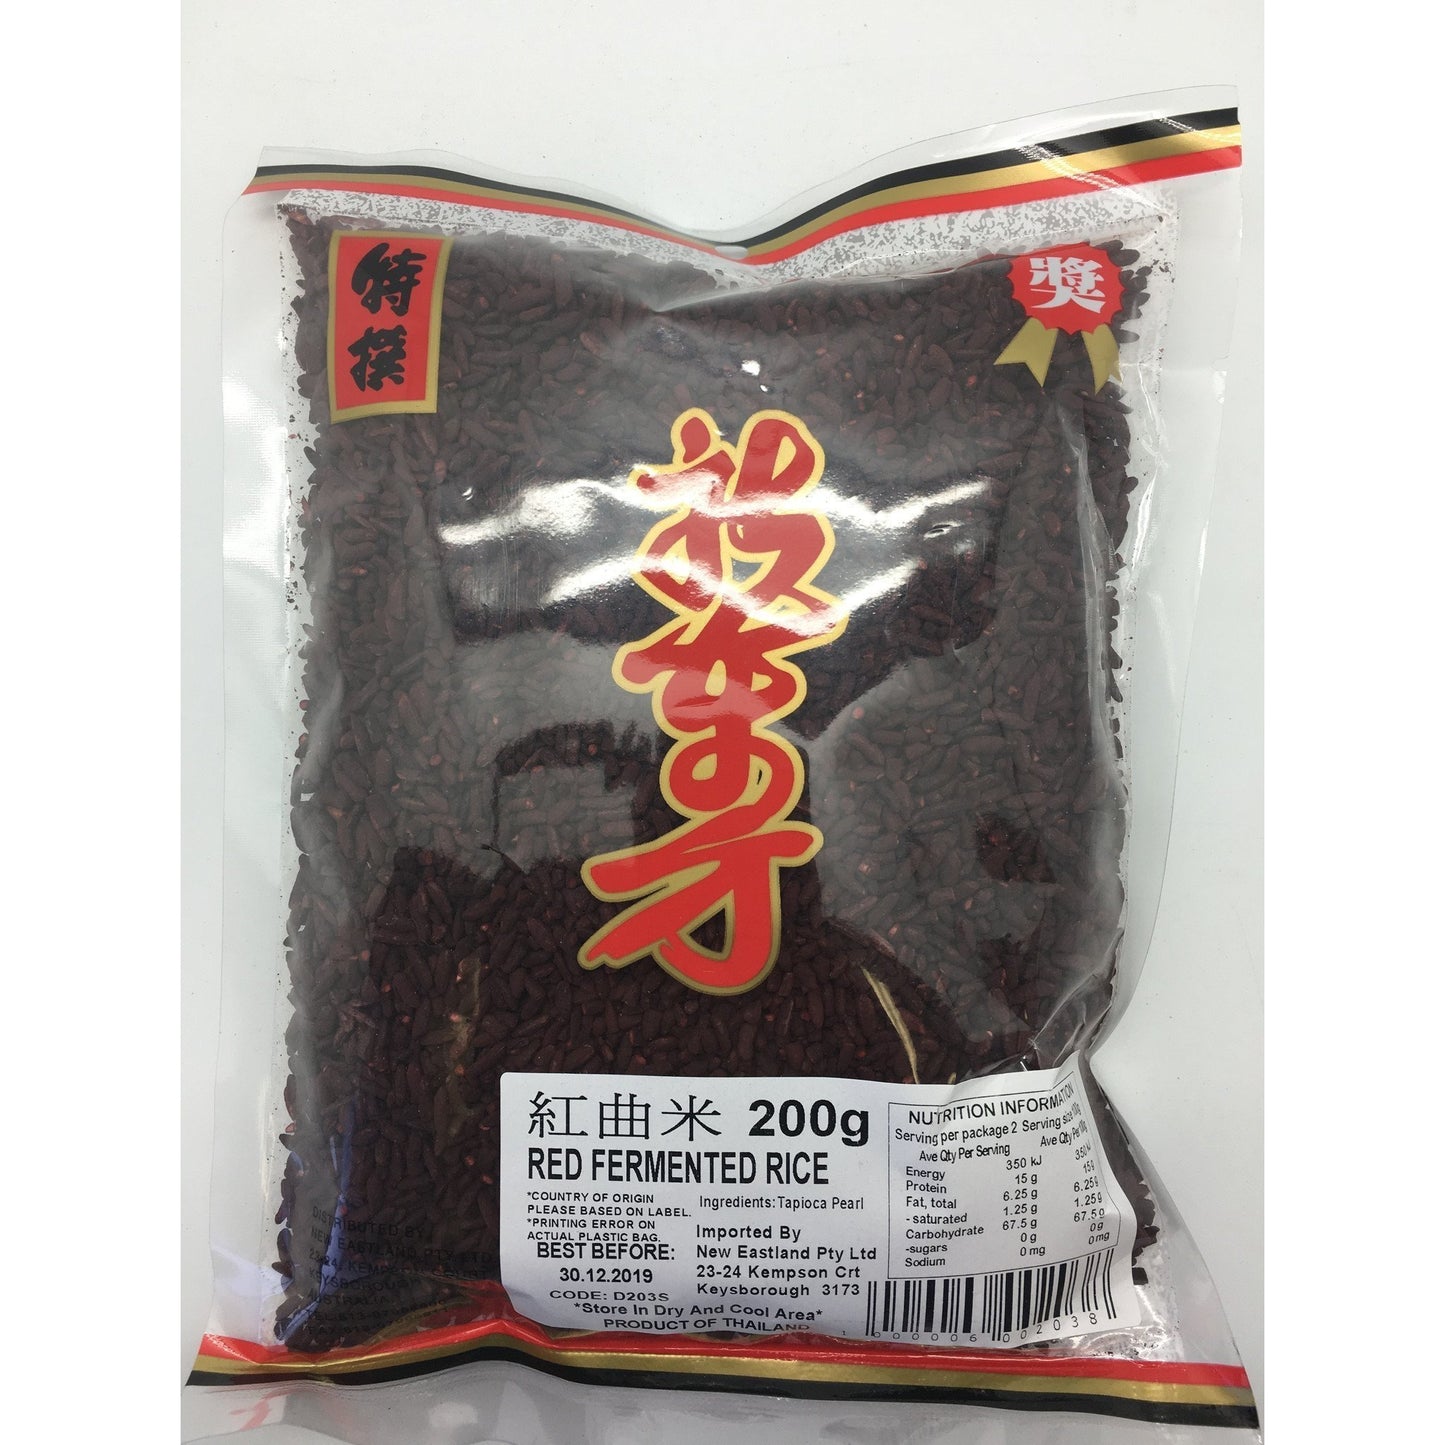 D203S New Eastland Pty Ltd - Red Fermented Rice 200g - 50 bags / 1 CTN - New Eastland Pty Ltd - Asian food wholesalers